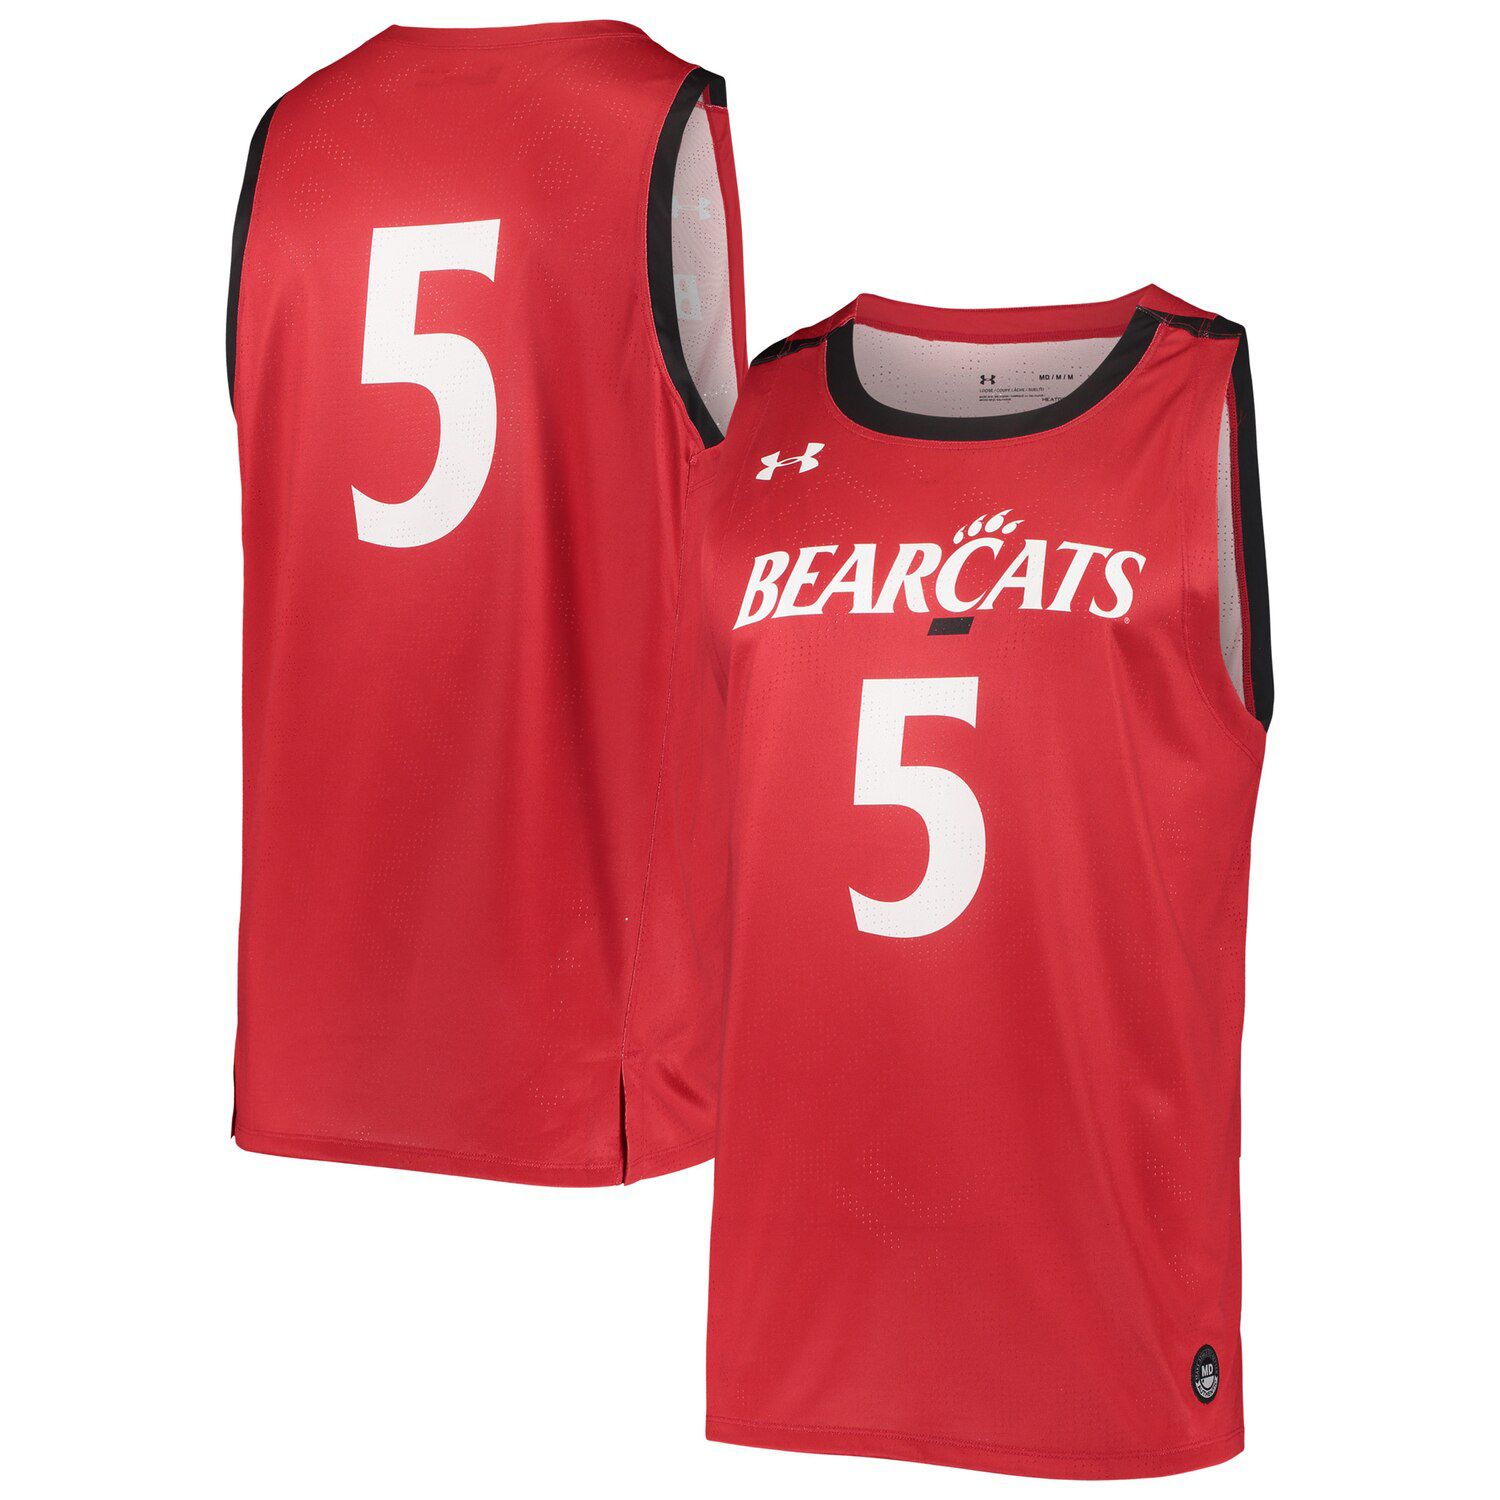 cincinnati bearcats basketball jersey